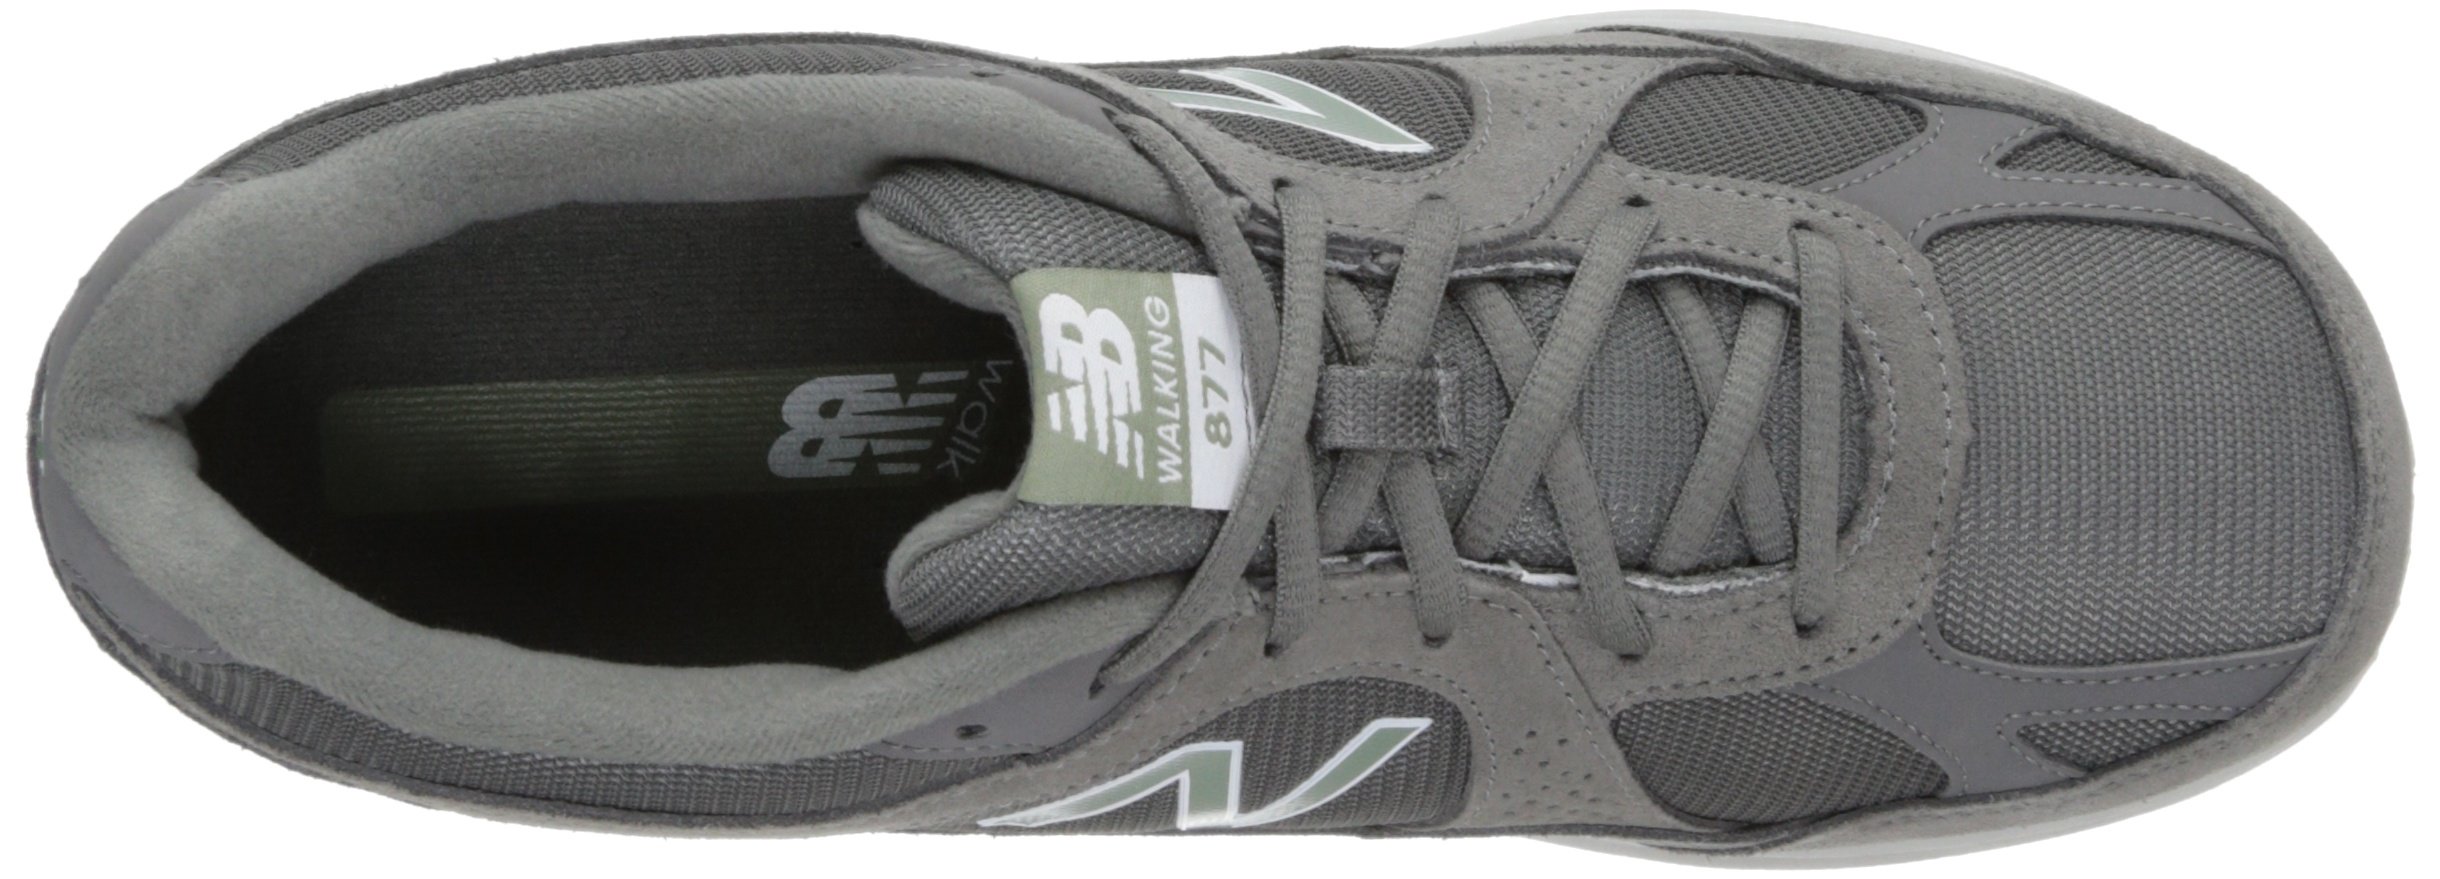 New Balance Men's 877 V1 Walking Shoe